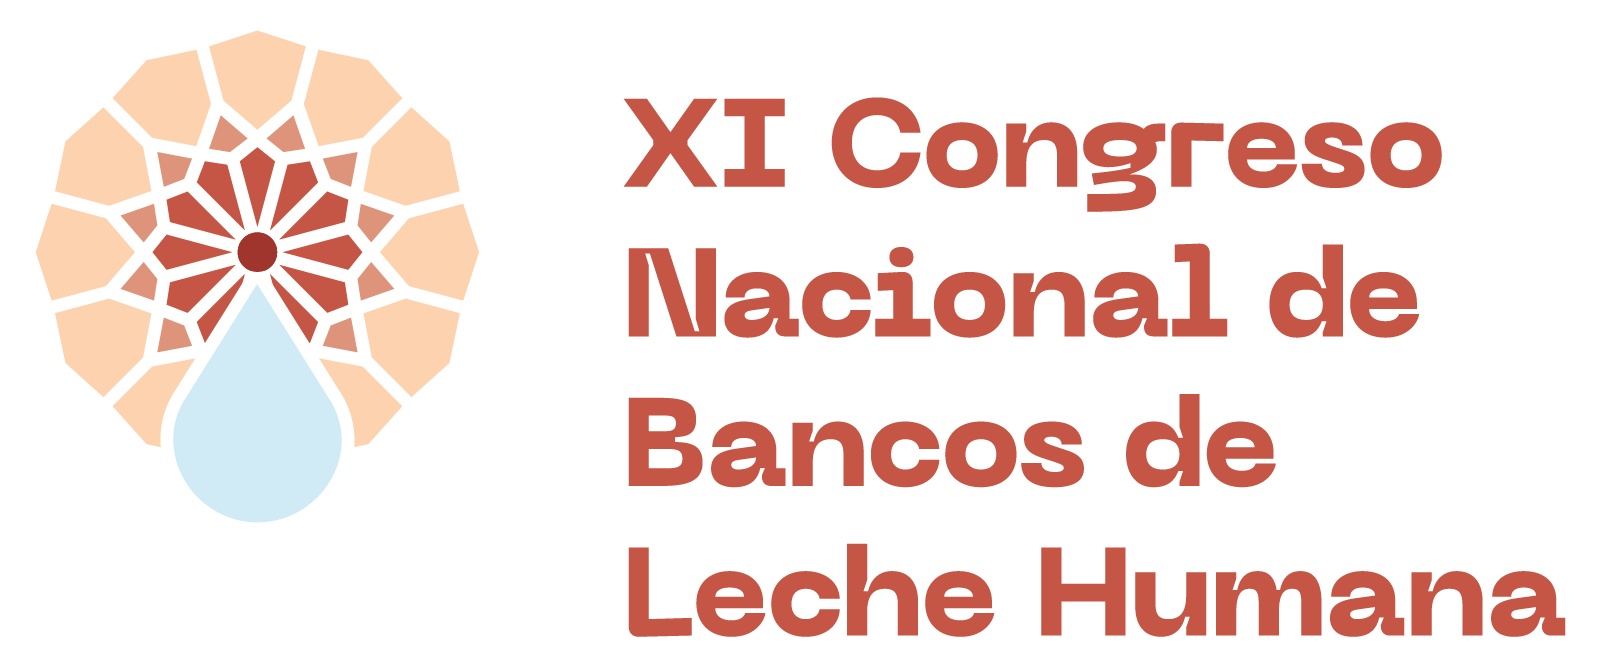 XI Congreso Nacional Bancos de Leche Humana